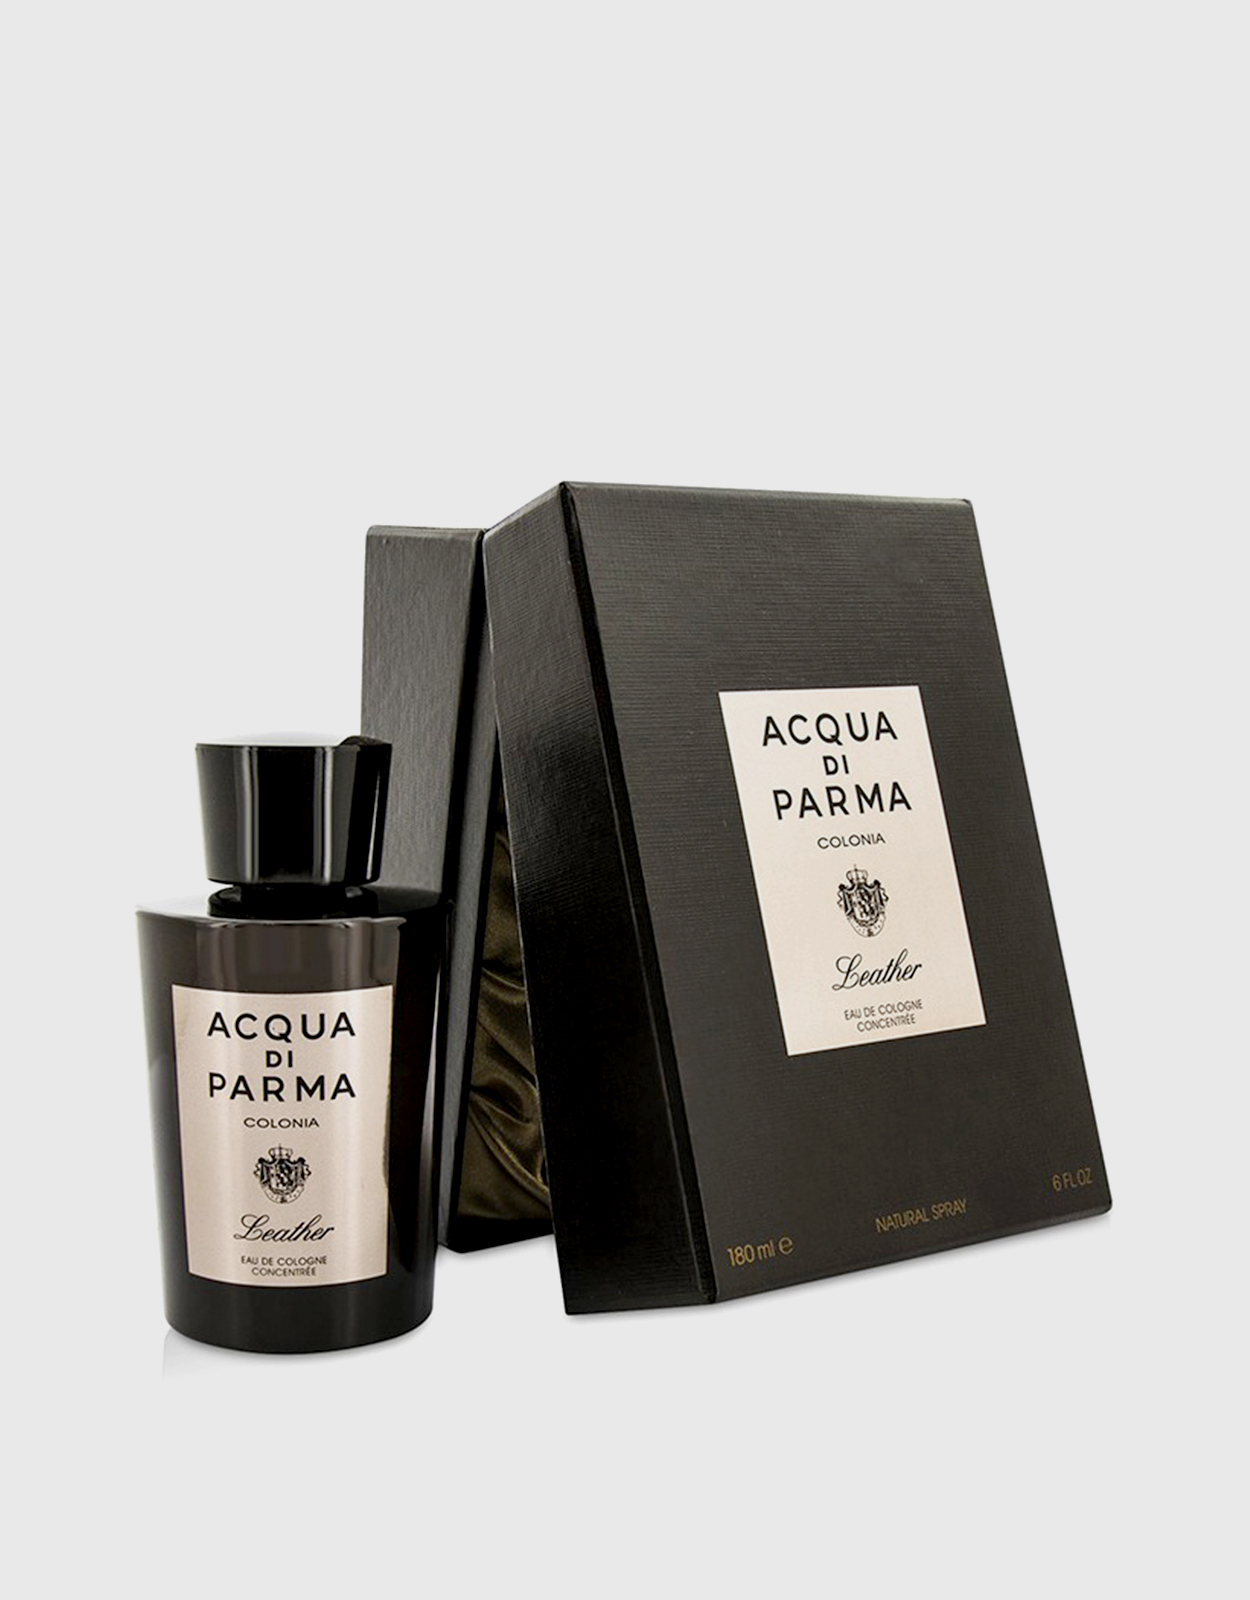 Acqua Di Parma Colonia Leather For Men Eau De Cologne Concentree 180ml Fragrance Perfume Men Ifchic Com